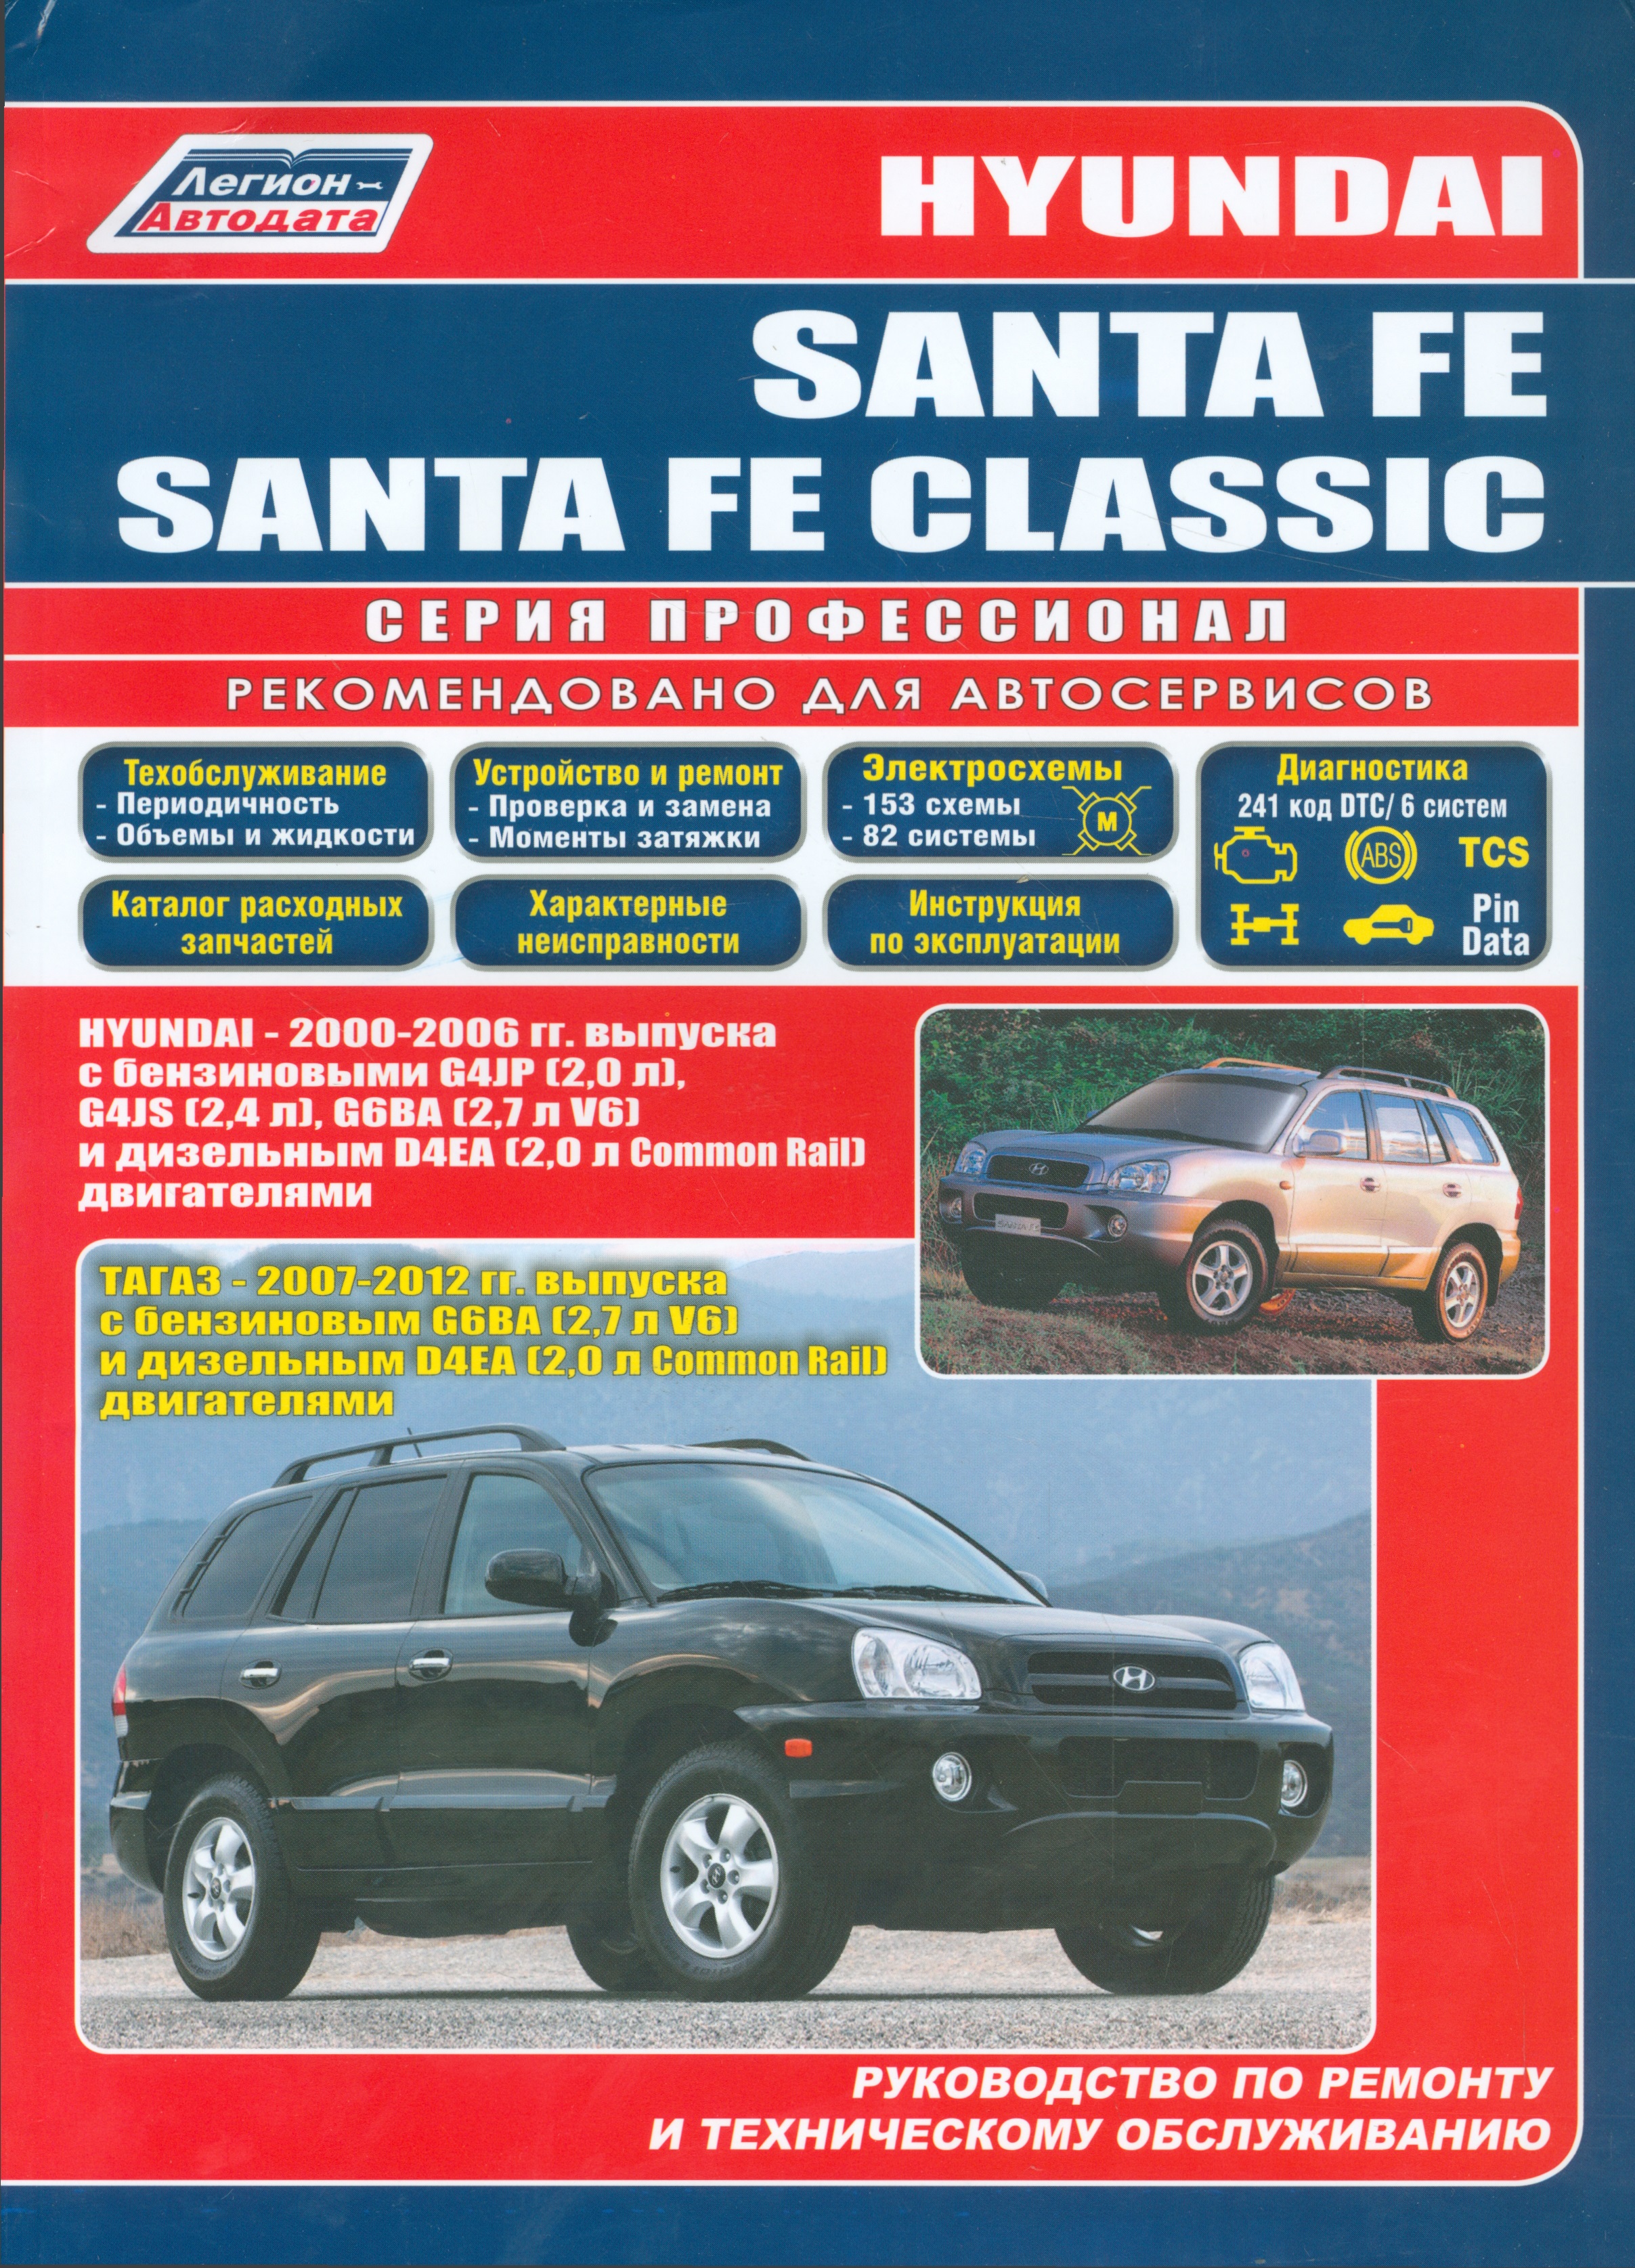 Hyundai SANTA FE SANTA FE Classic Hyundai 2000-2006 гг. вып. с бенз. G4JP (мПрофессионал) коврики в салон tagaz hyundai santa fe classic 2007